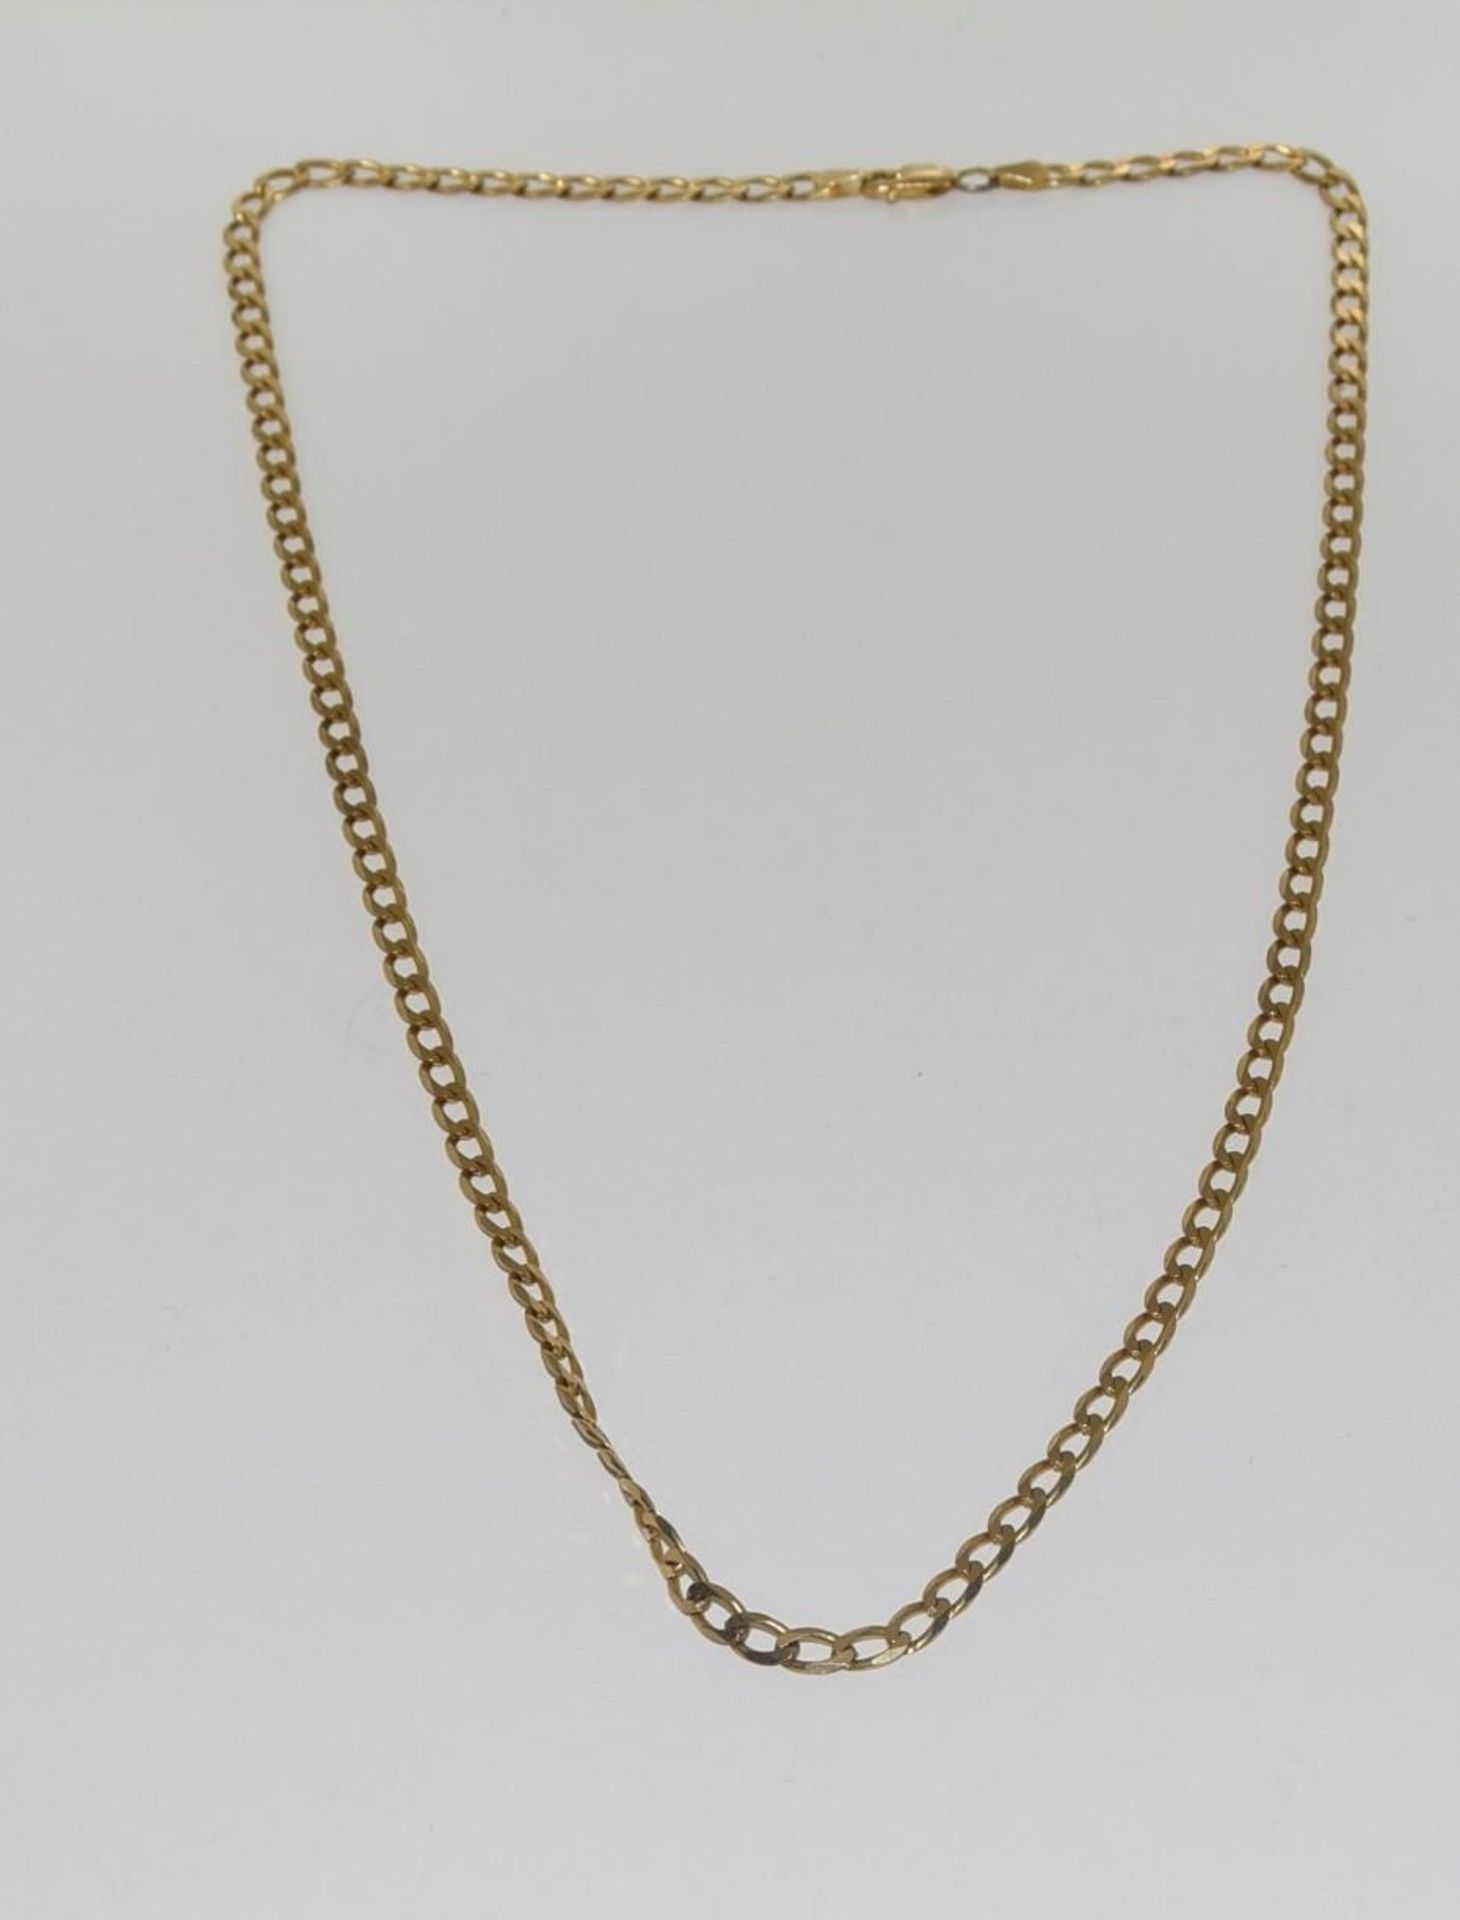 9ct gold flatlink chain 52cm long 10gm